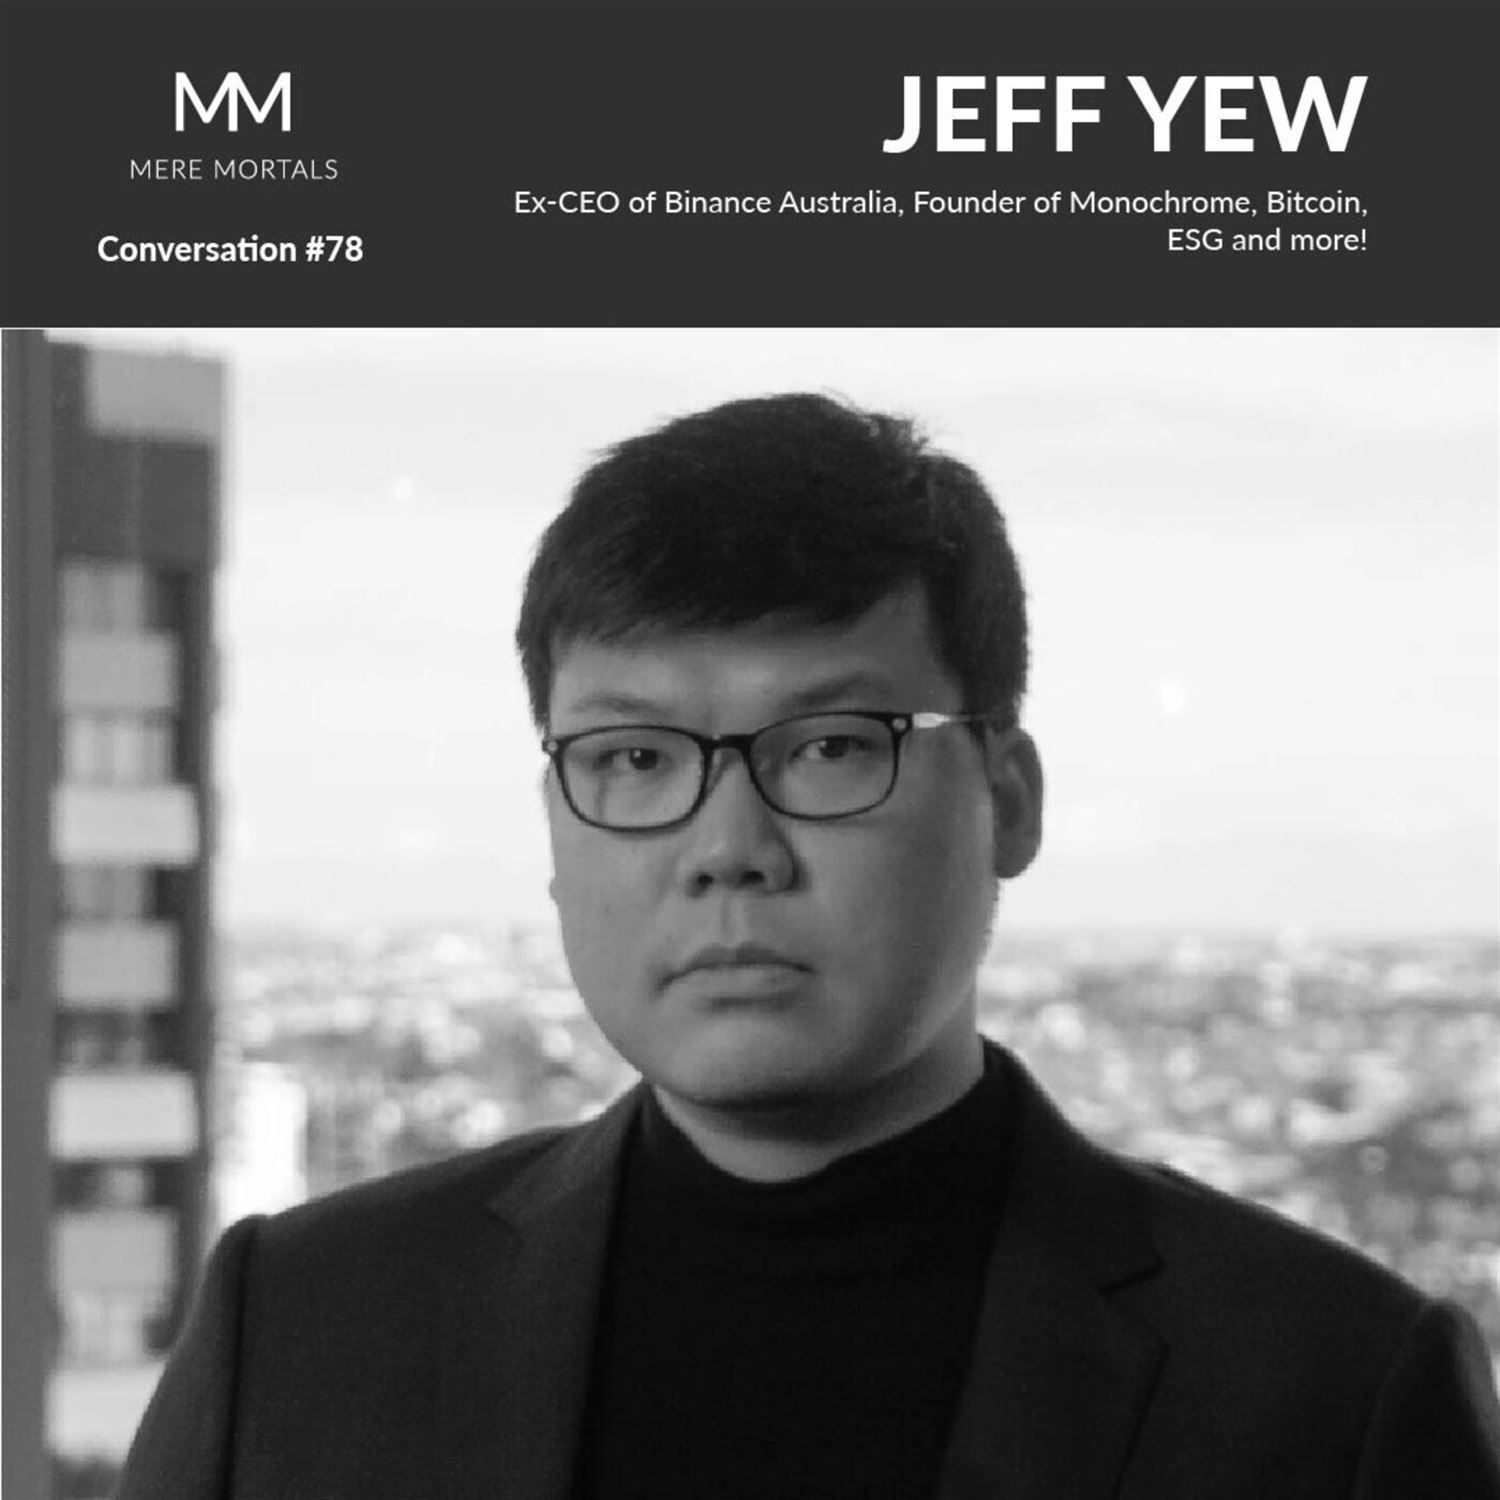 Listen to Jeff Yew's interview